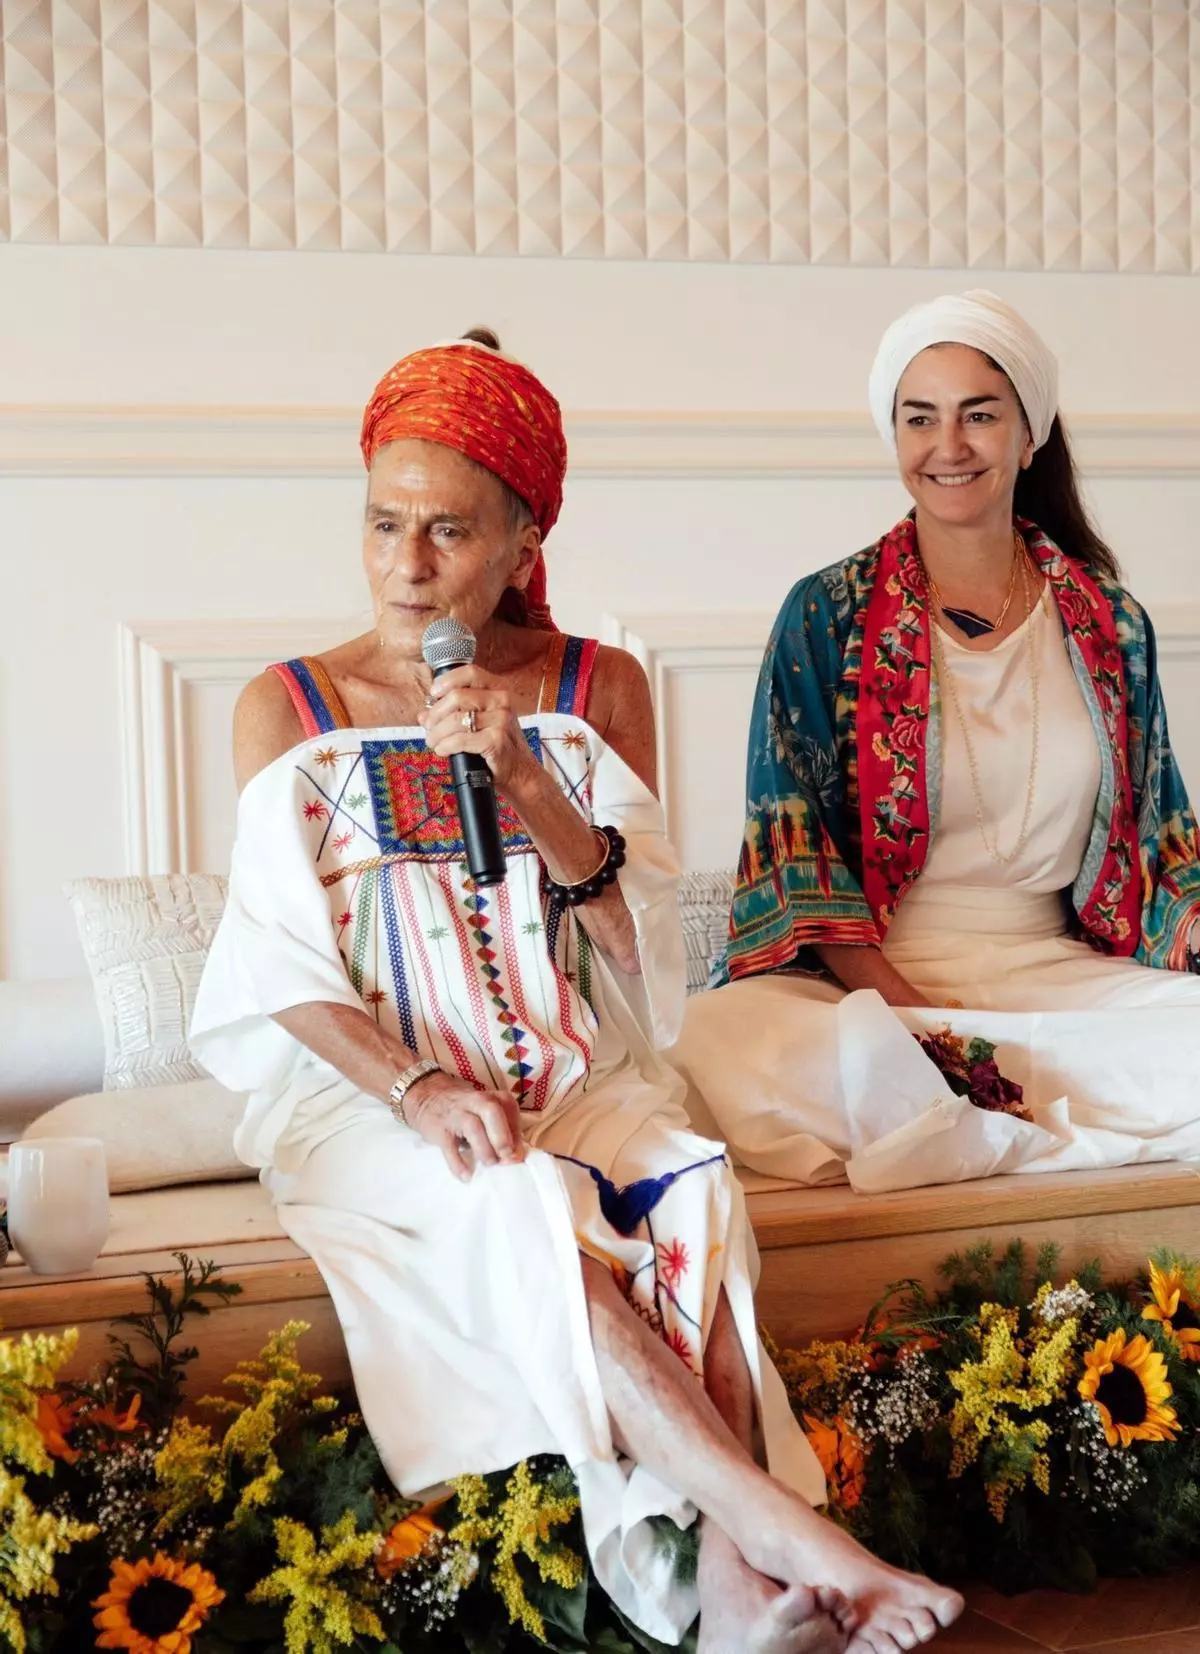 Gurmukh, referente mundial del kundalini yoga, regresa a Mallorca con Sadhana Works